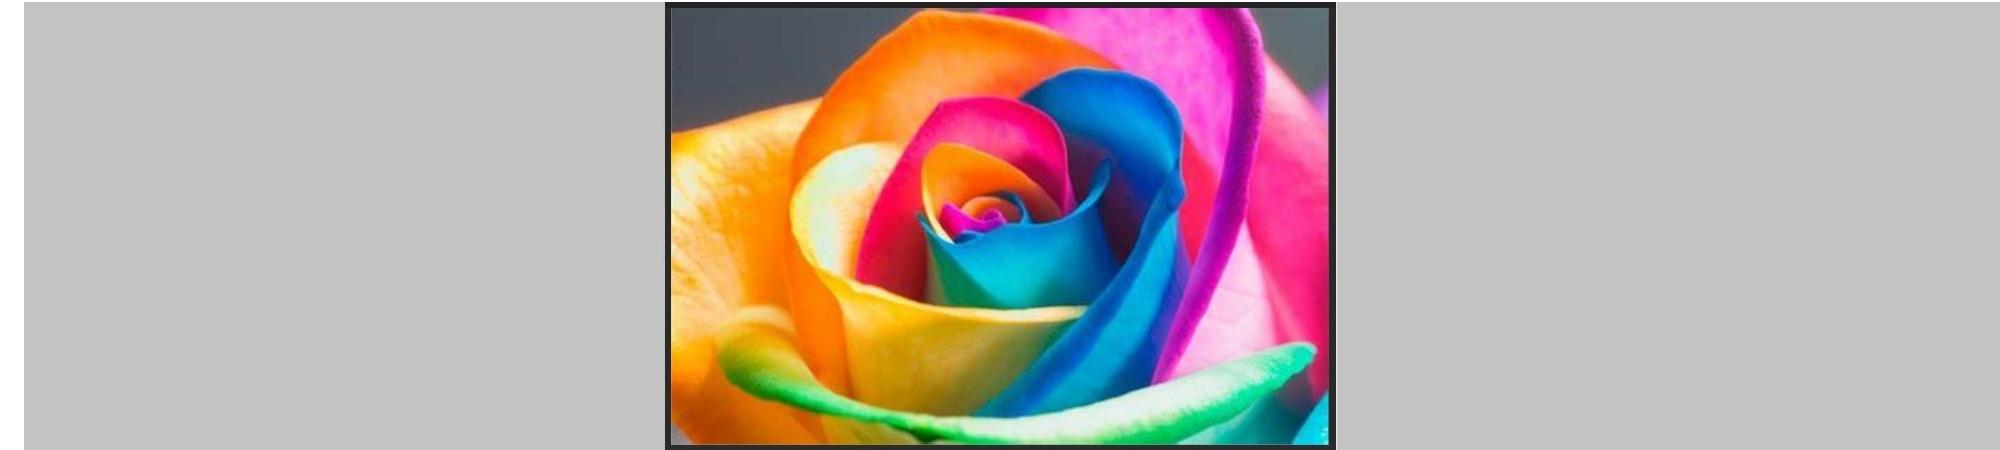 A multi-colored rose bloom. 